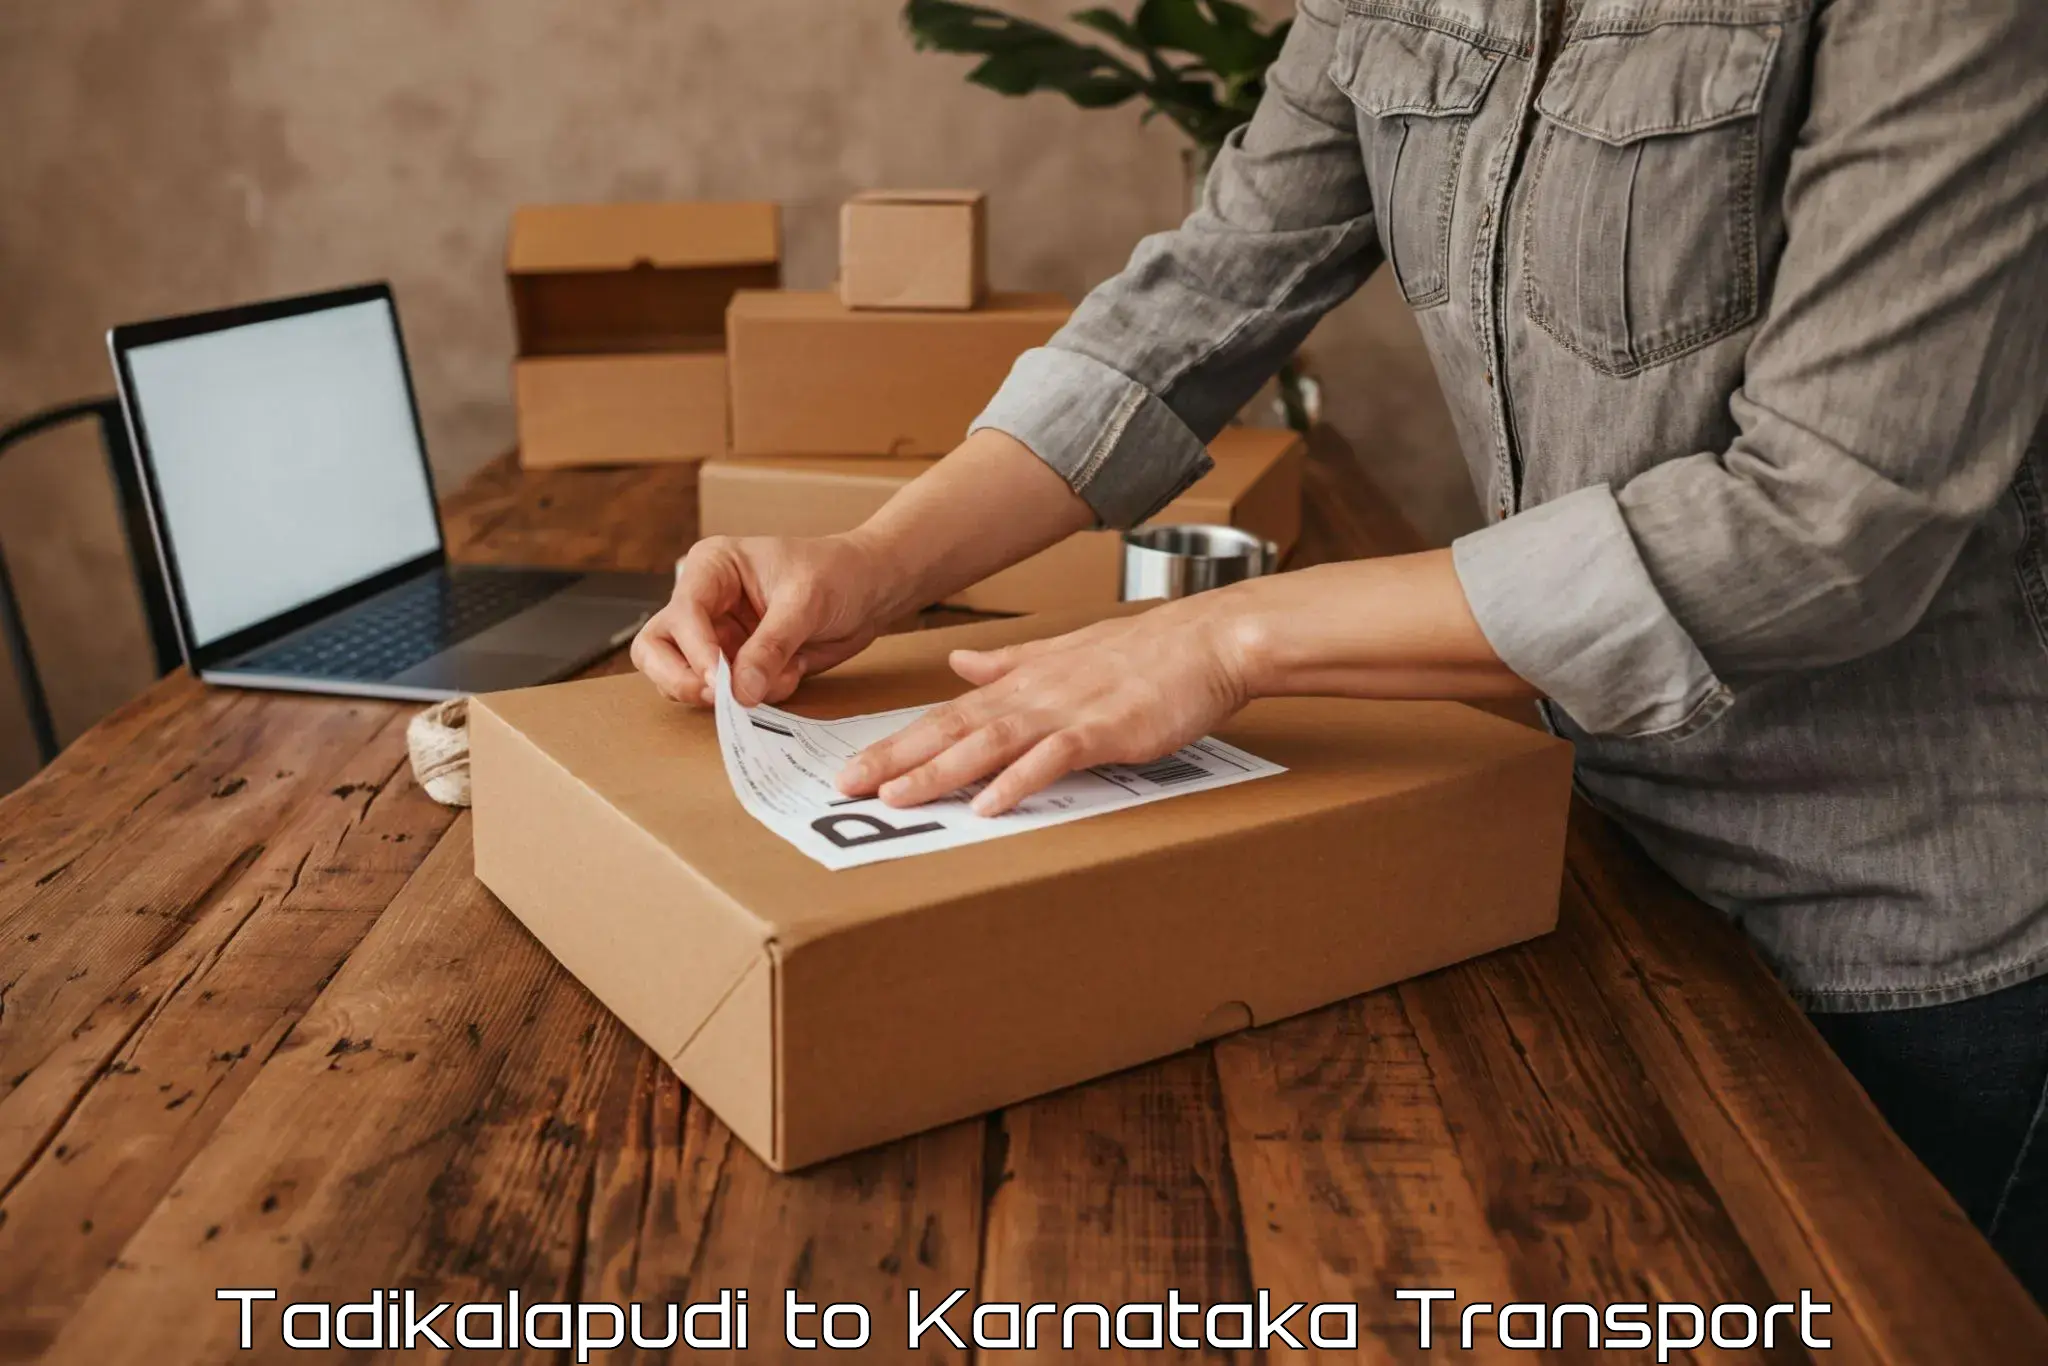 Transport in sharing Tadikalapudi to Bangalore